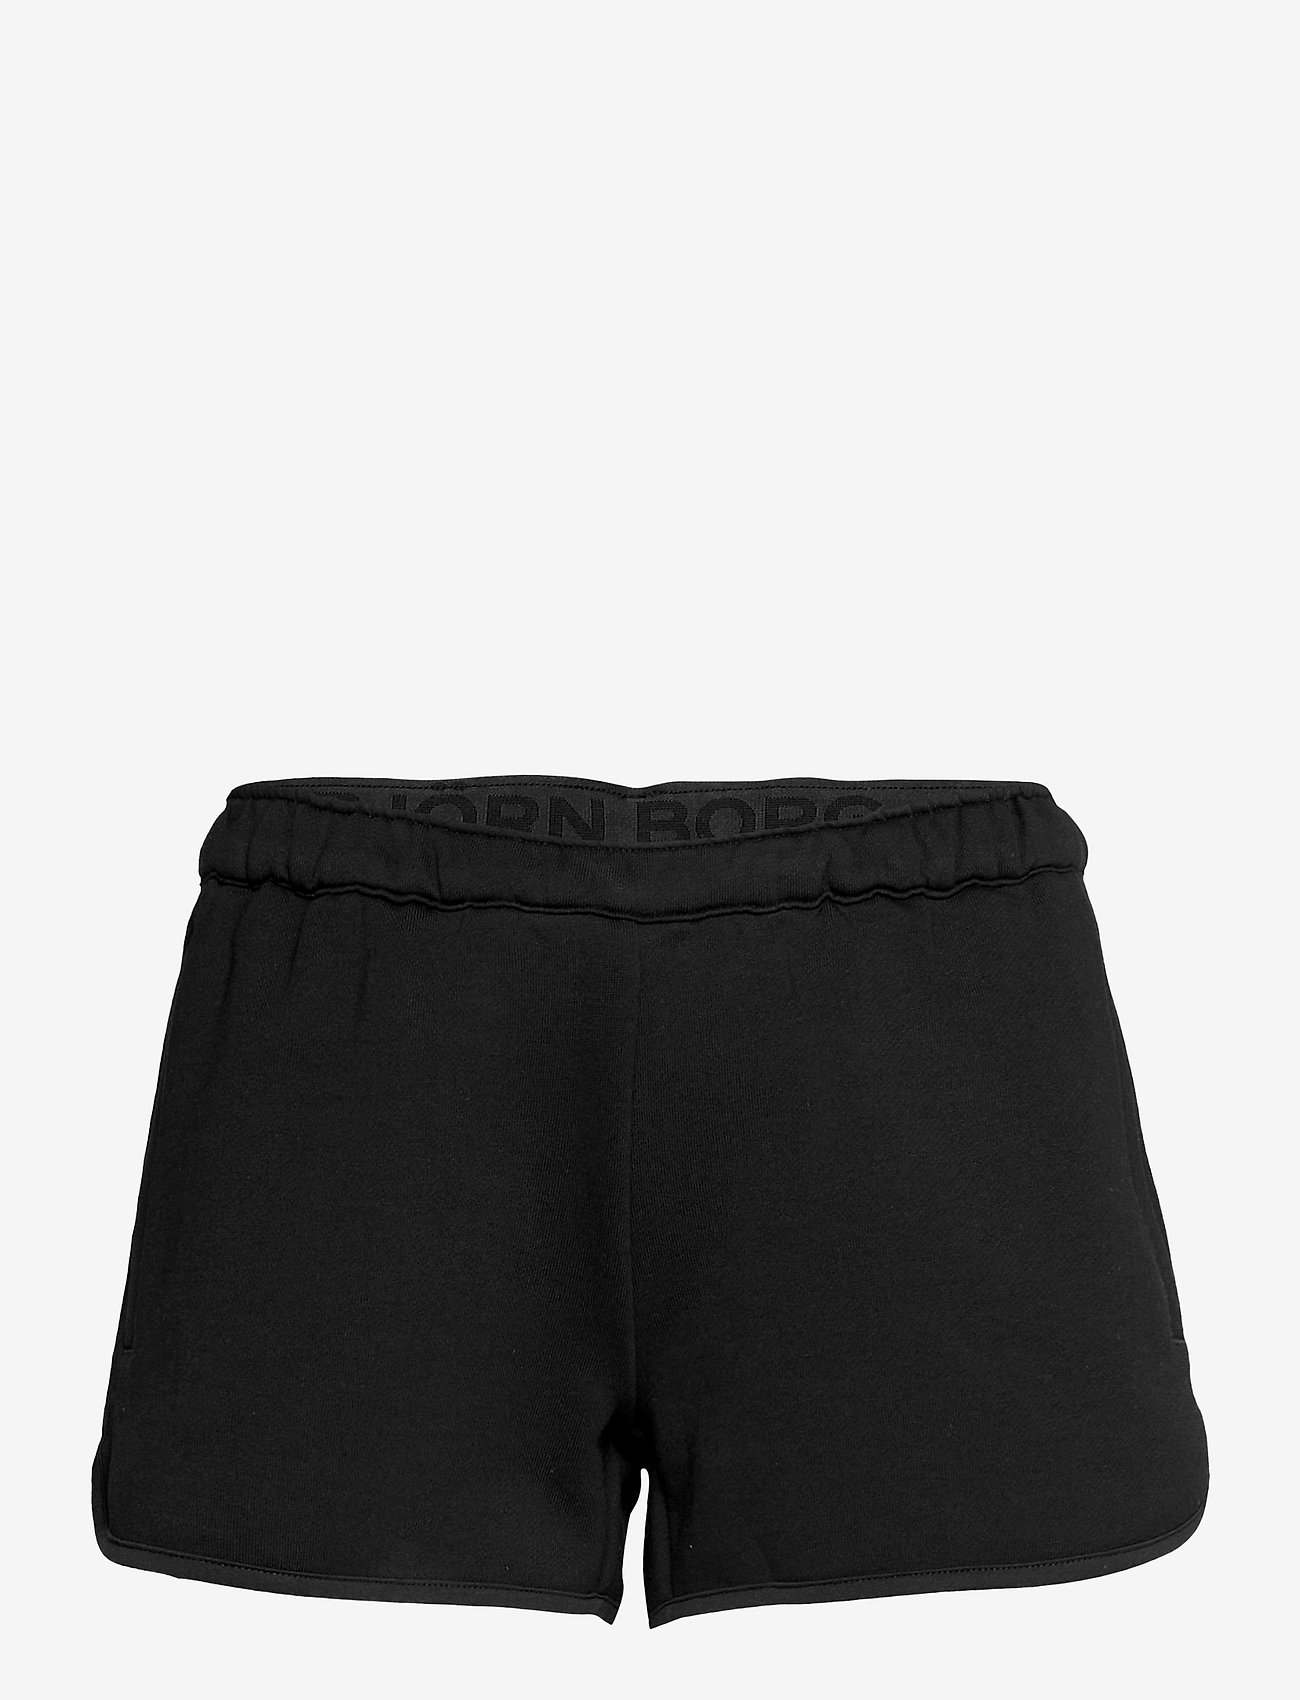 Björn Borg - SWEAT SHORTS MILLIE MILLIE - casual shorts - black beauty - 0